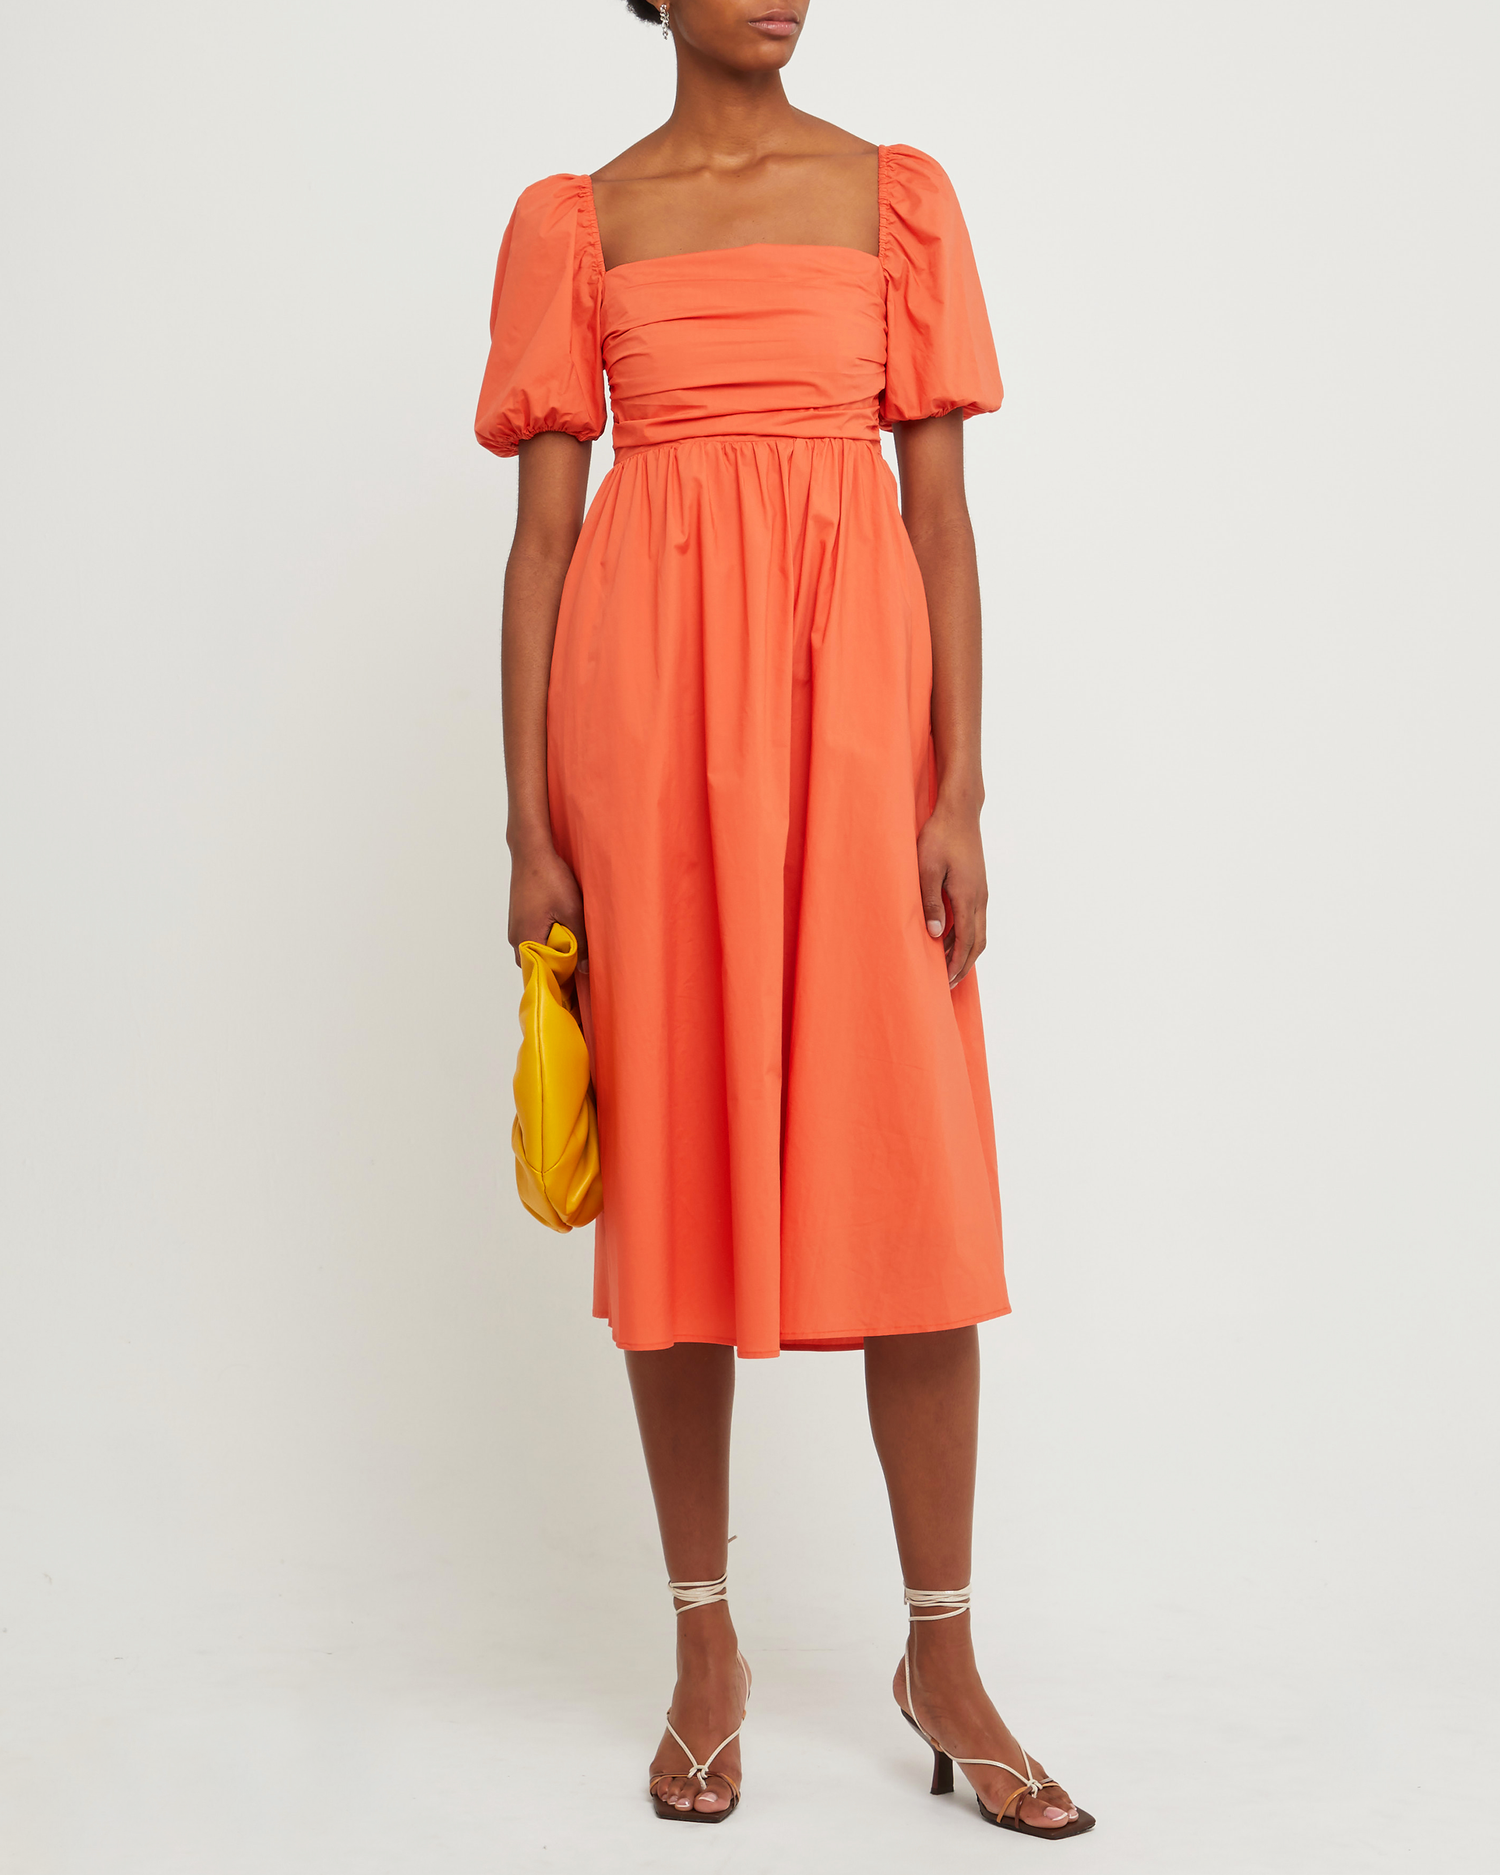 Fourth image of River Dress, a orange midi dress, square neckline, short puff sleeves, gathered bodice